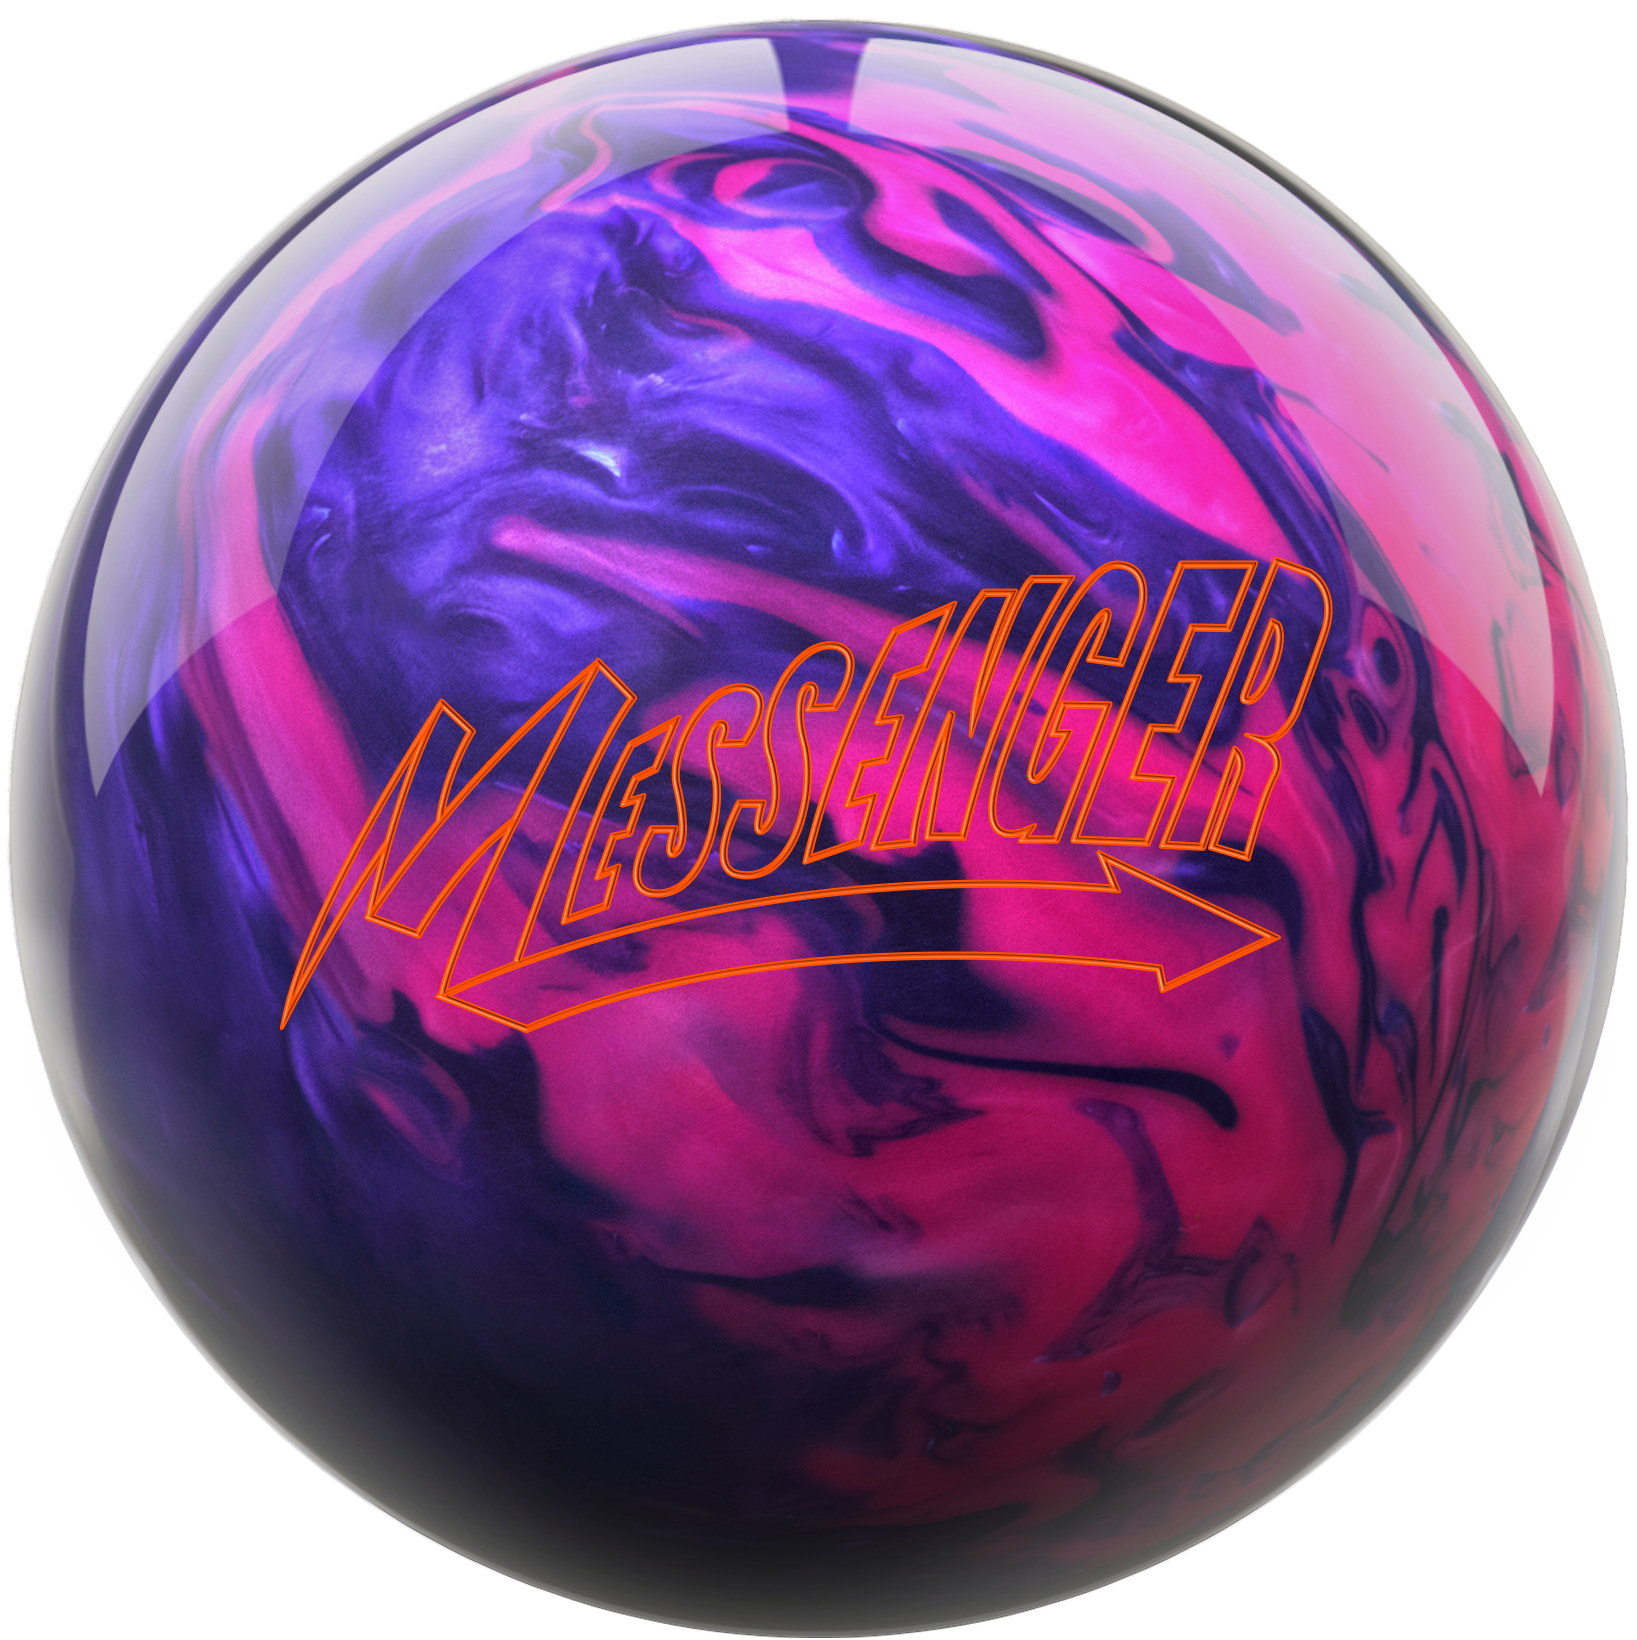 15lb Columbia Messenger Super Flex Pearl Reactive Bowling Ball Black/Red 